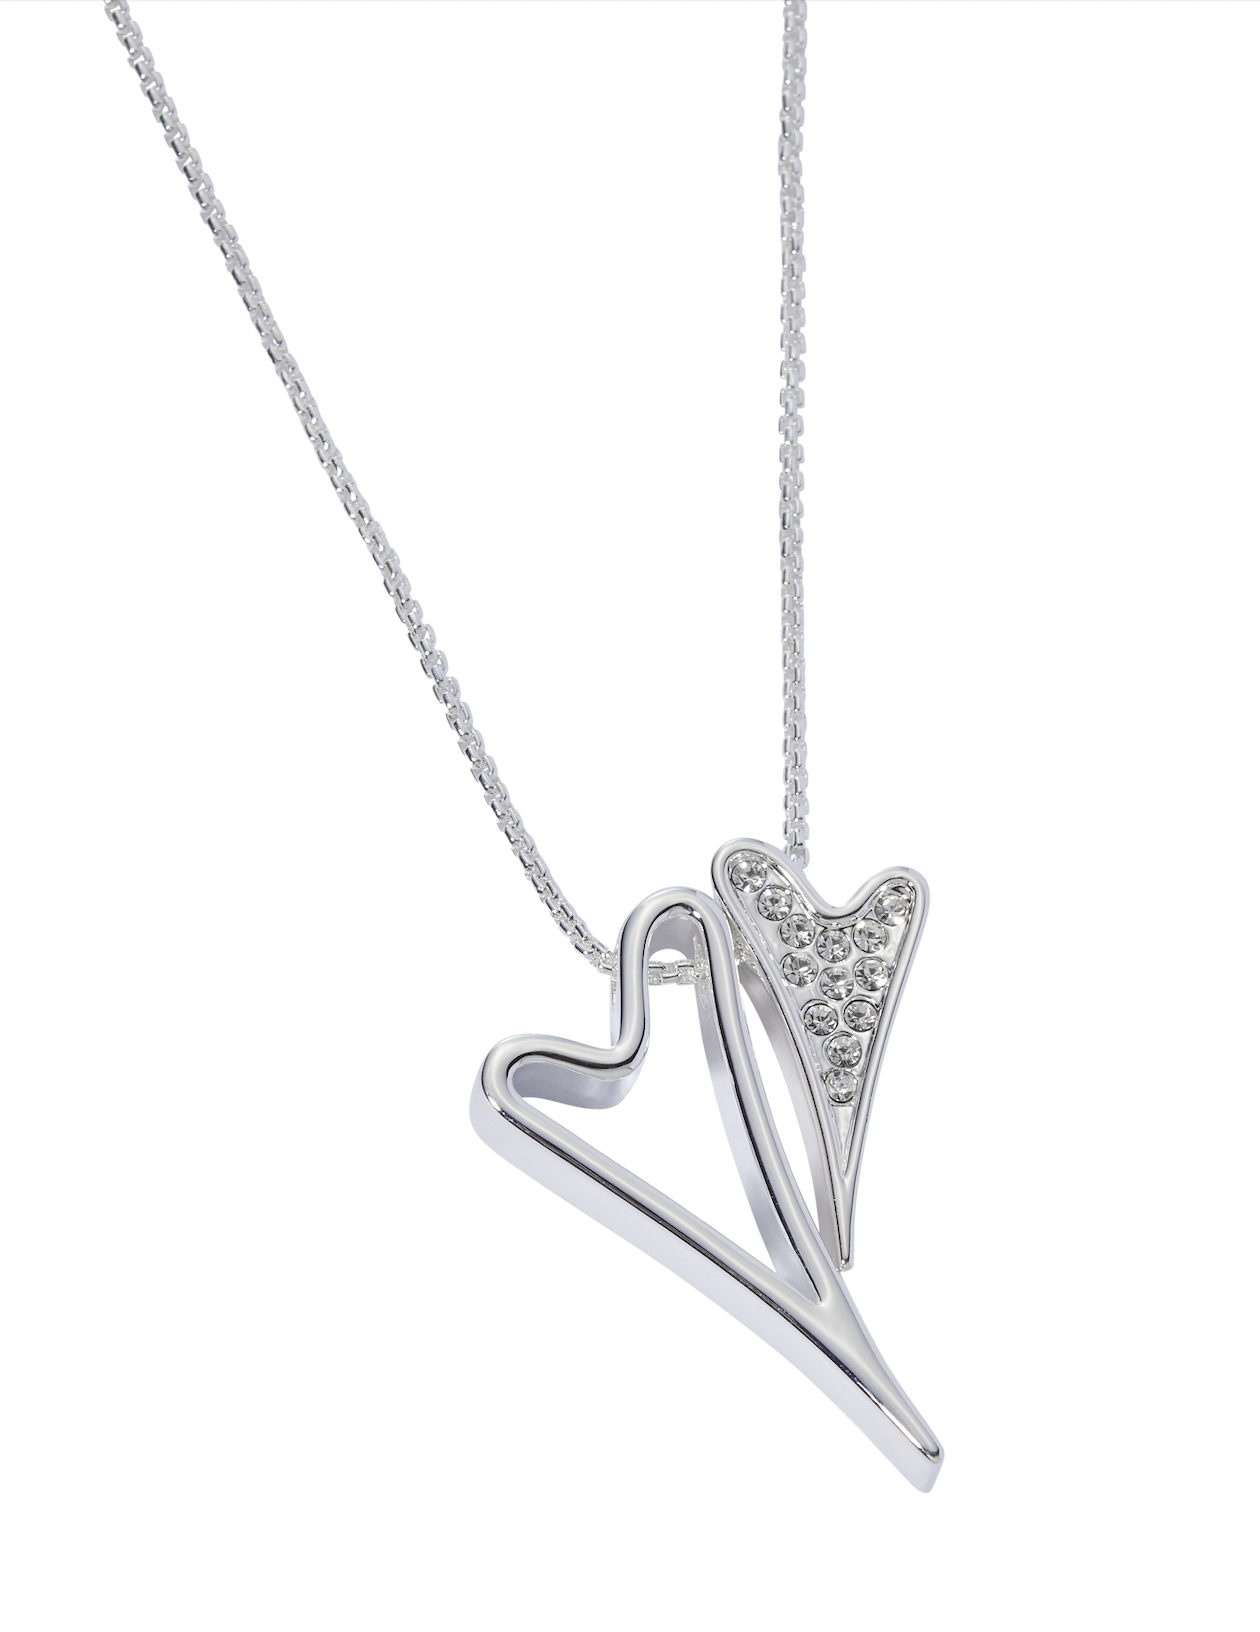 Necklace Silver with a hollow & diamante hearts pendant